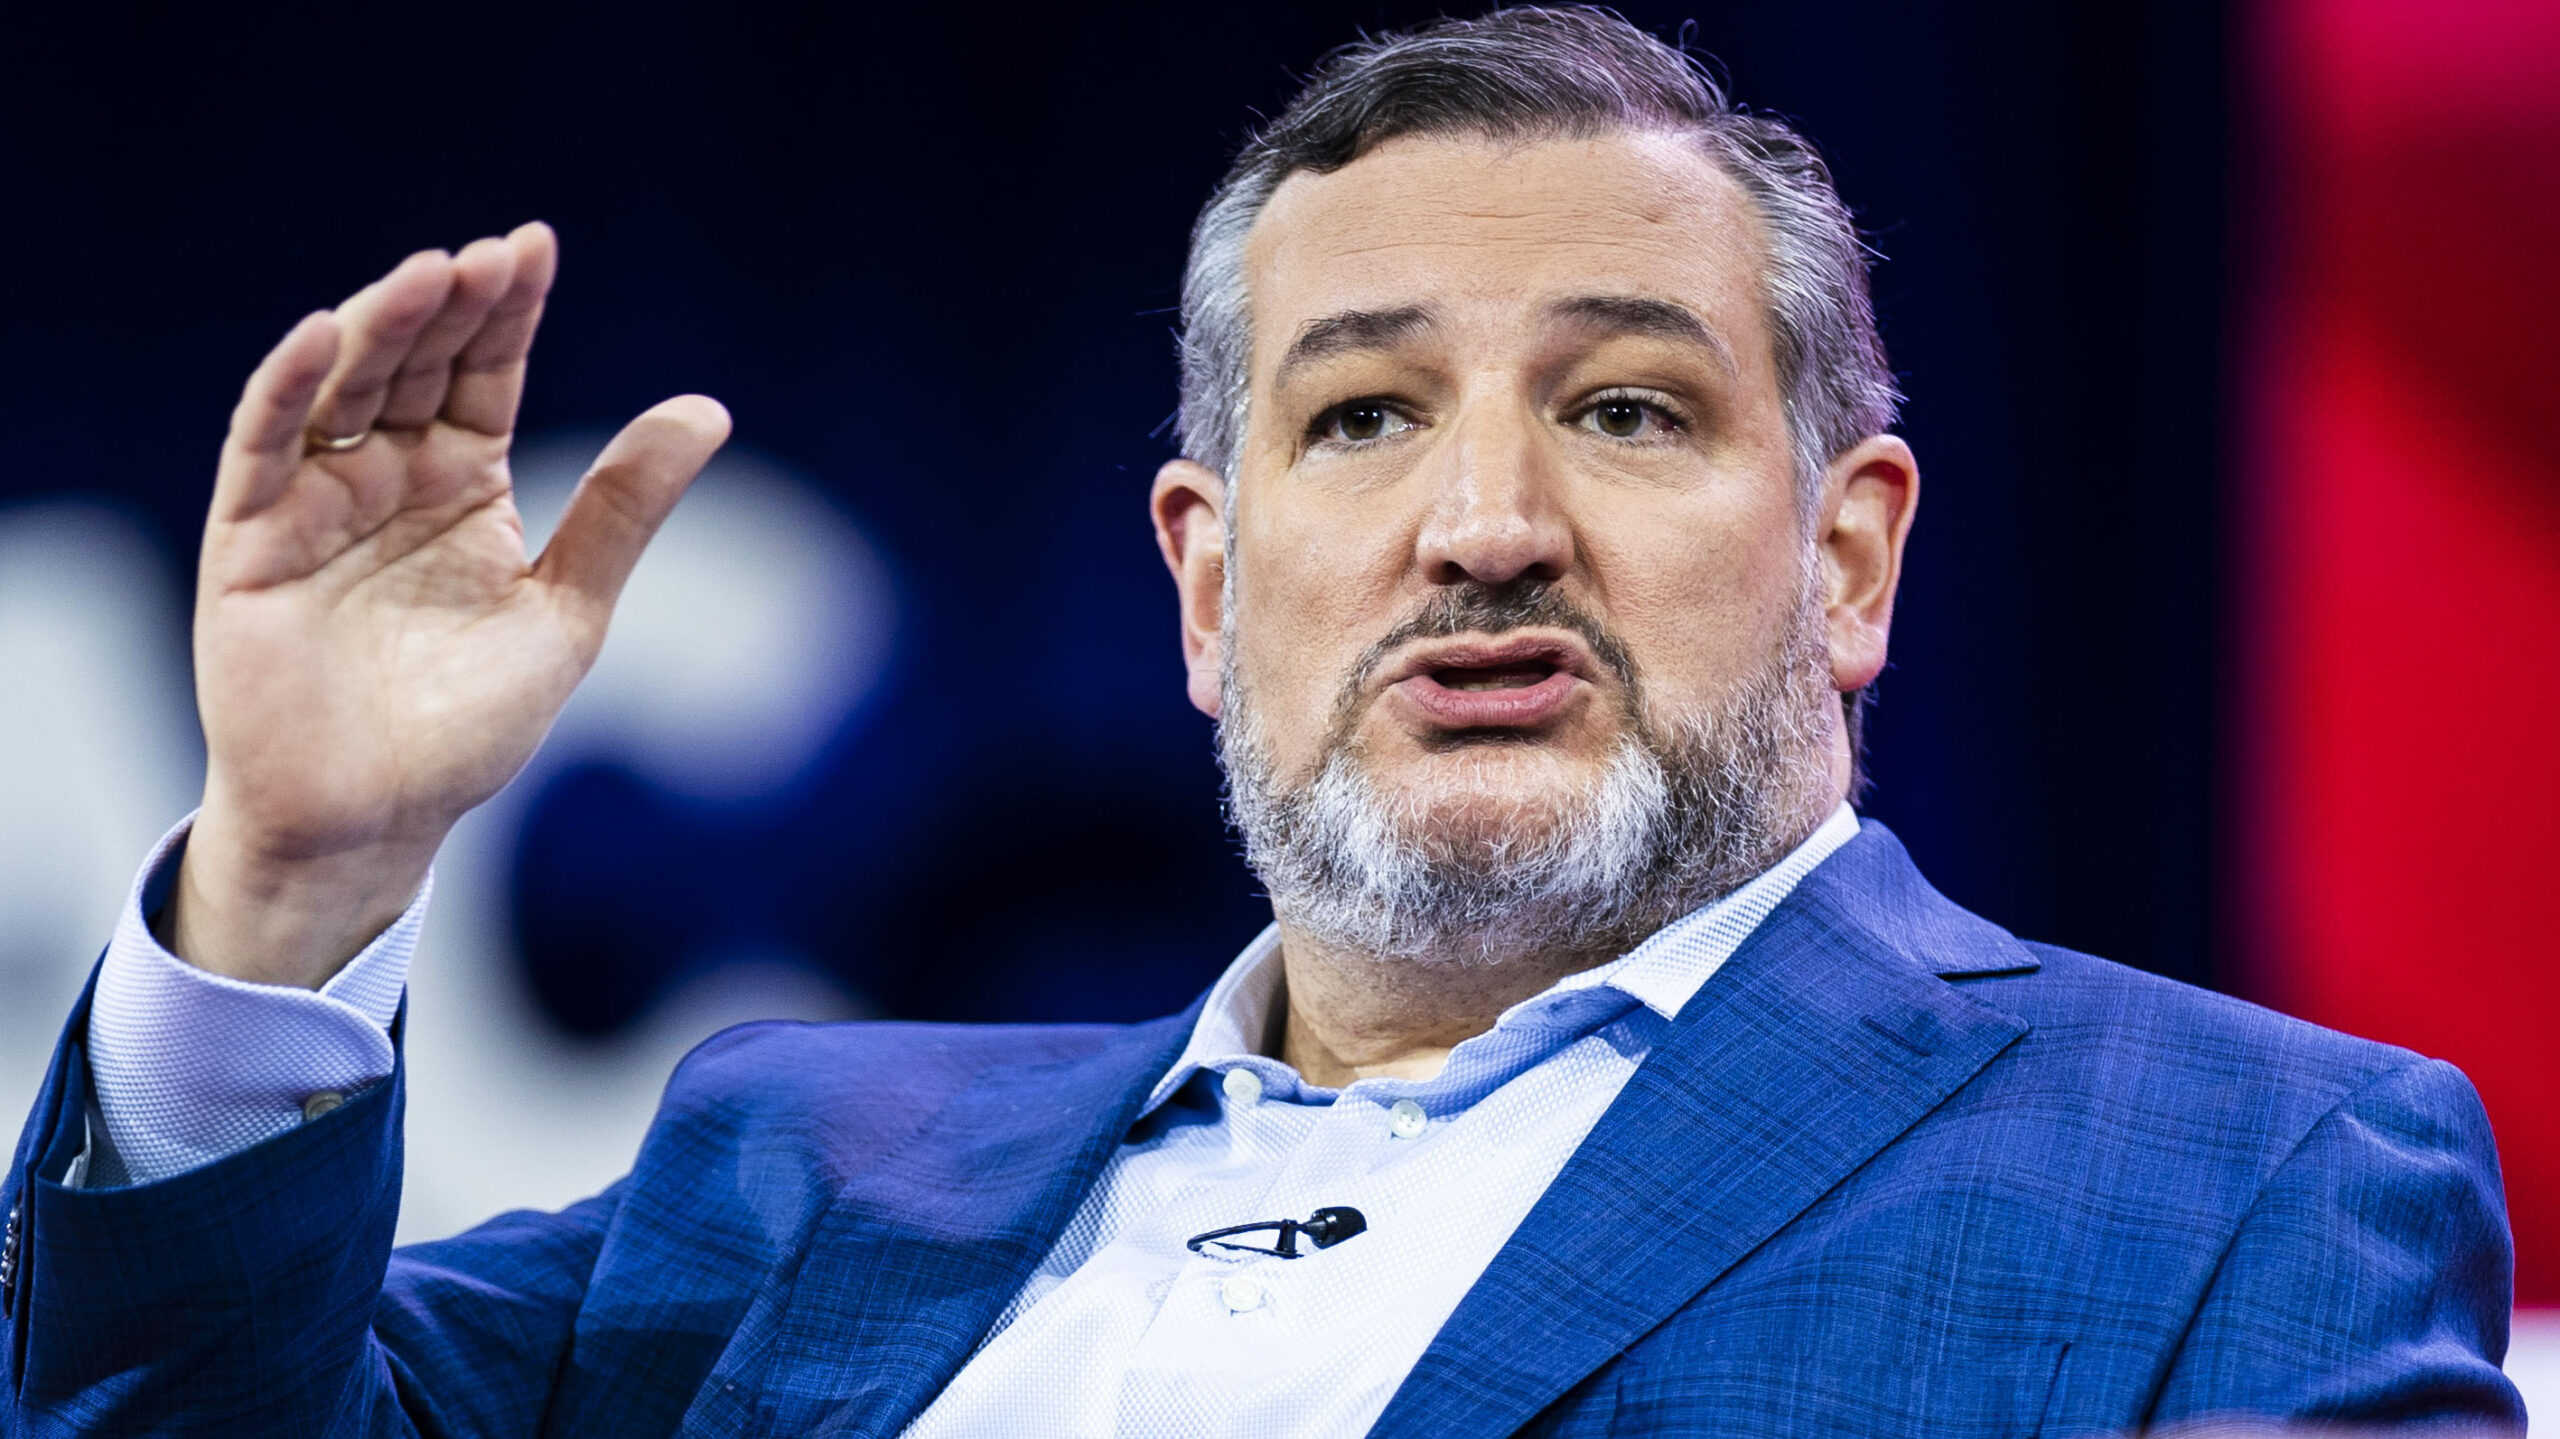 Ted Cruz accuses Democrats of aiding cartels, disregarding American suffering.